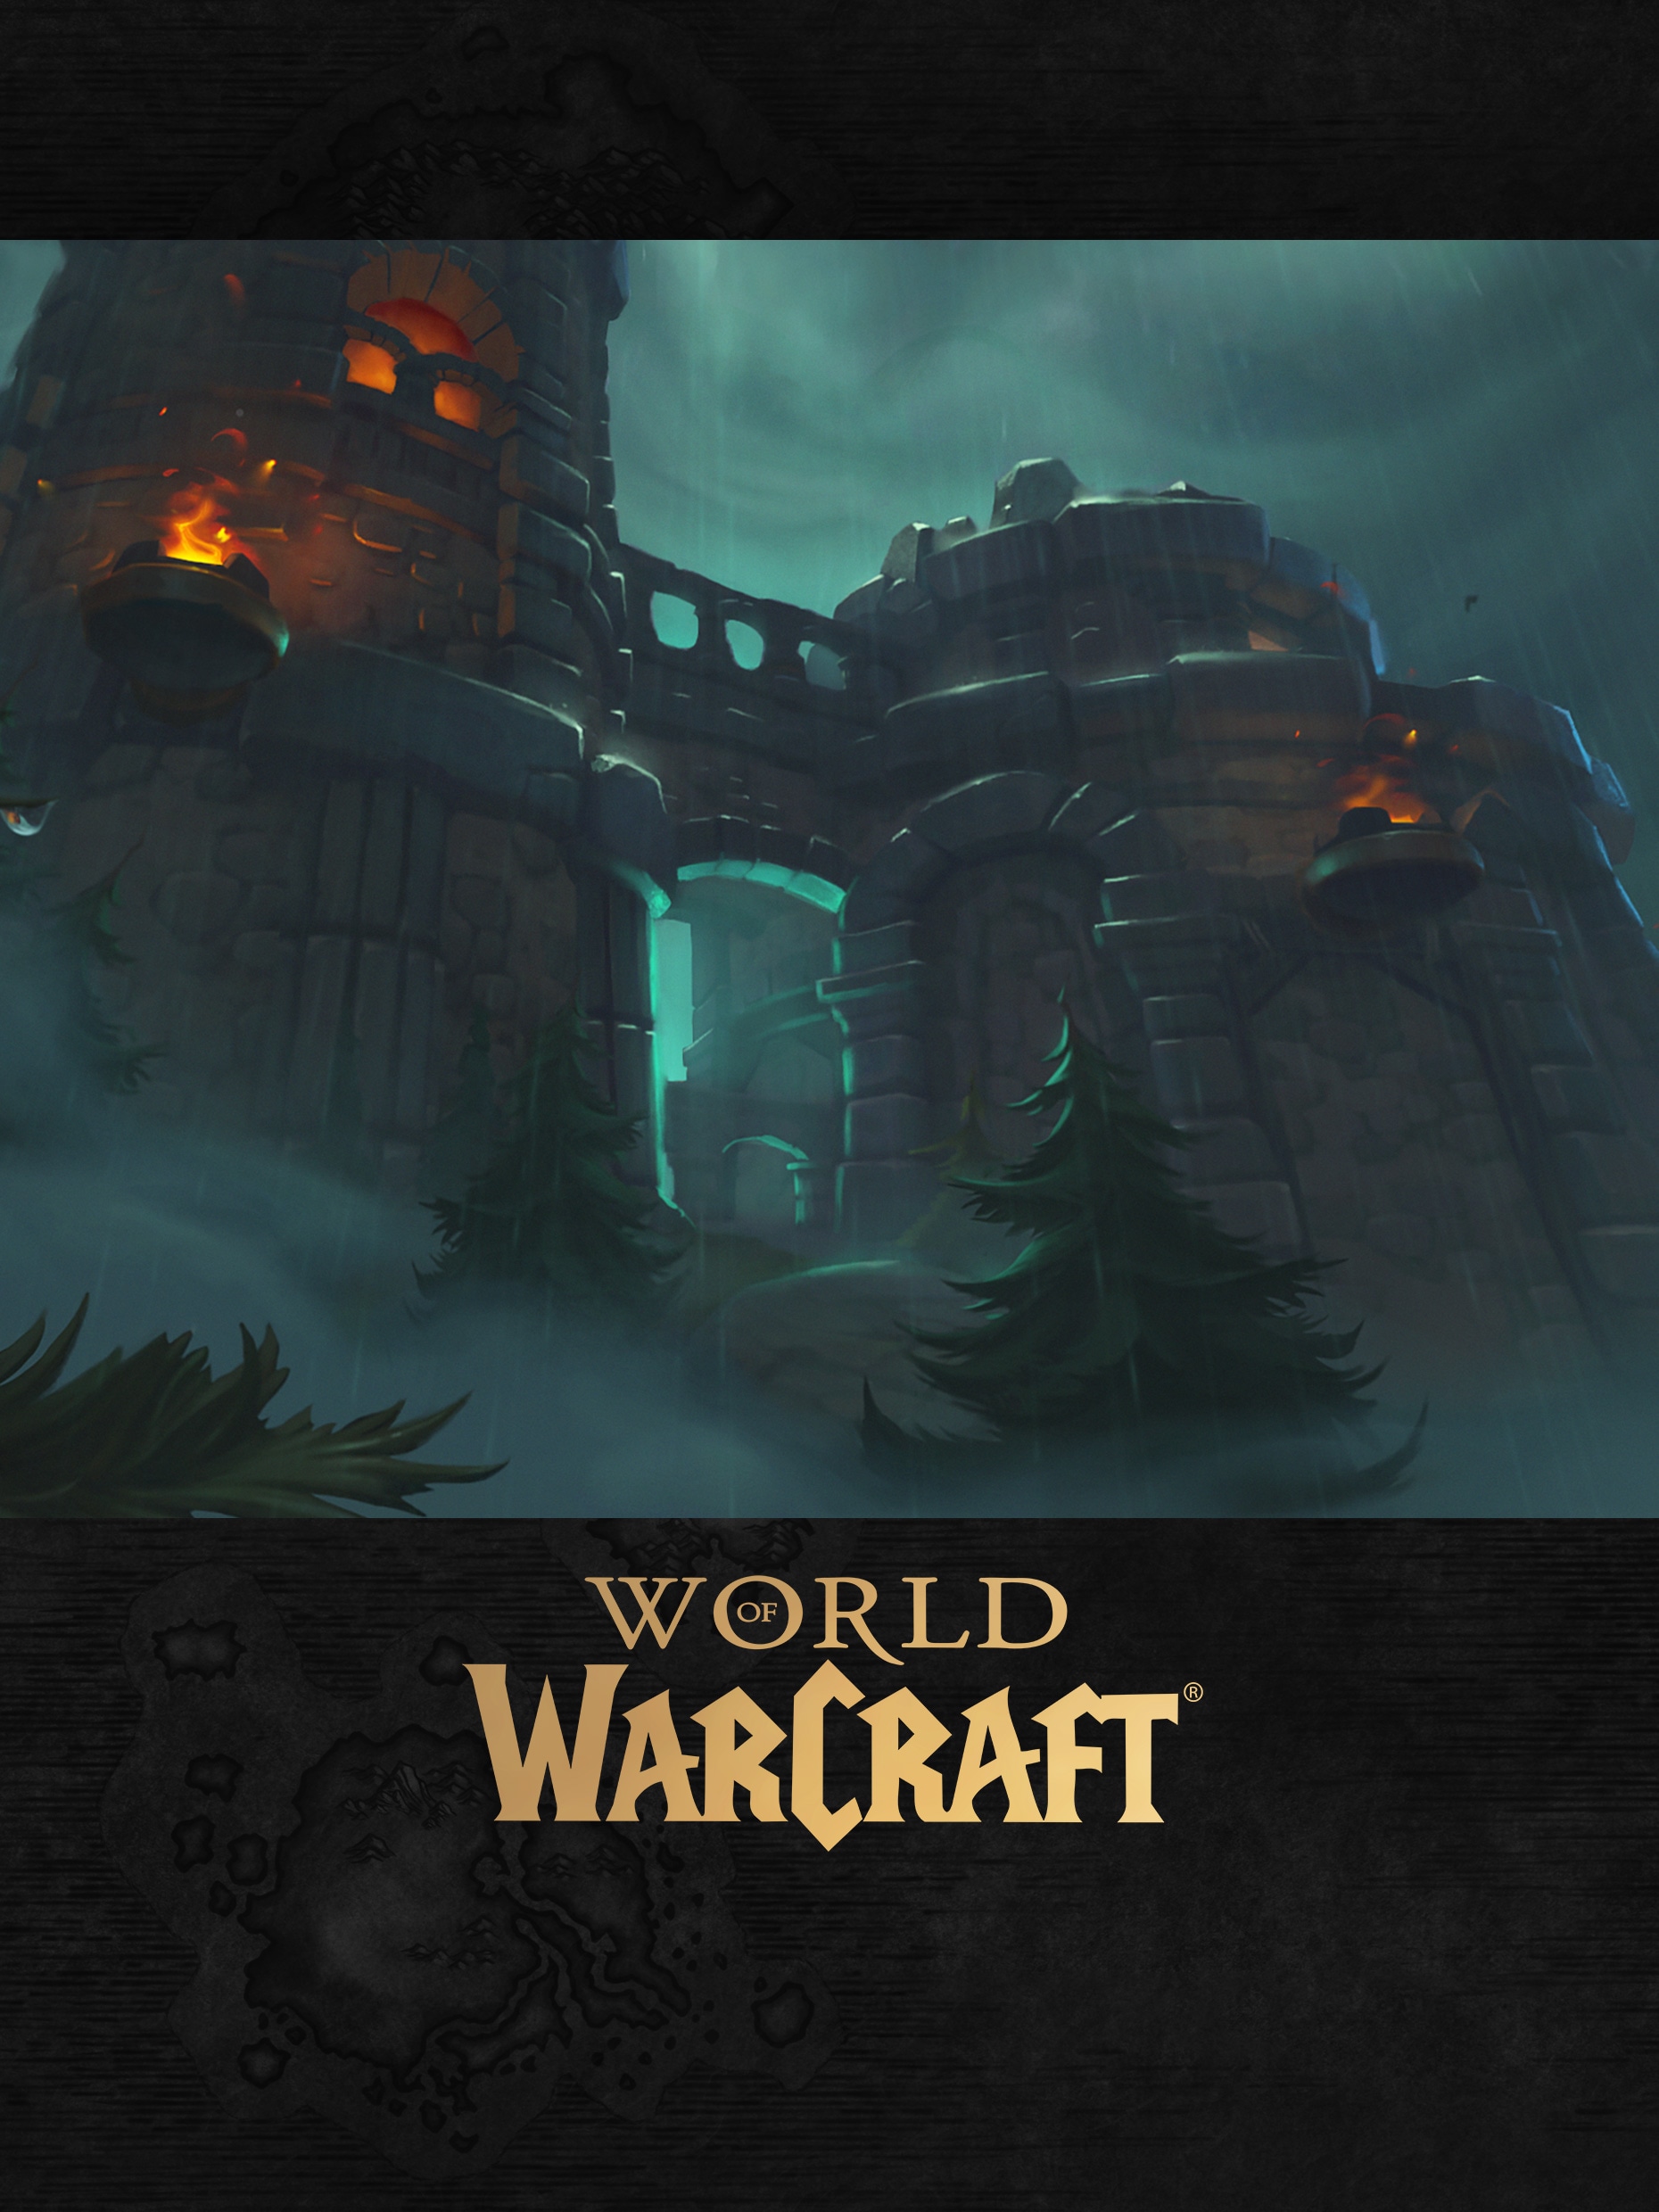 World Of Warcraft News And Development Updates